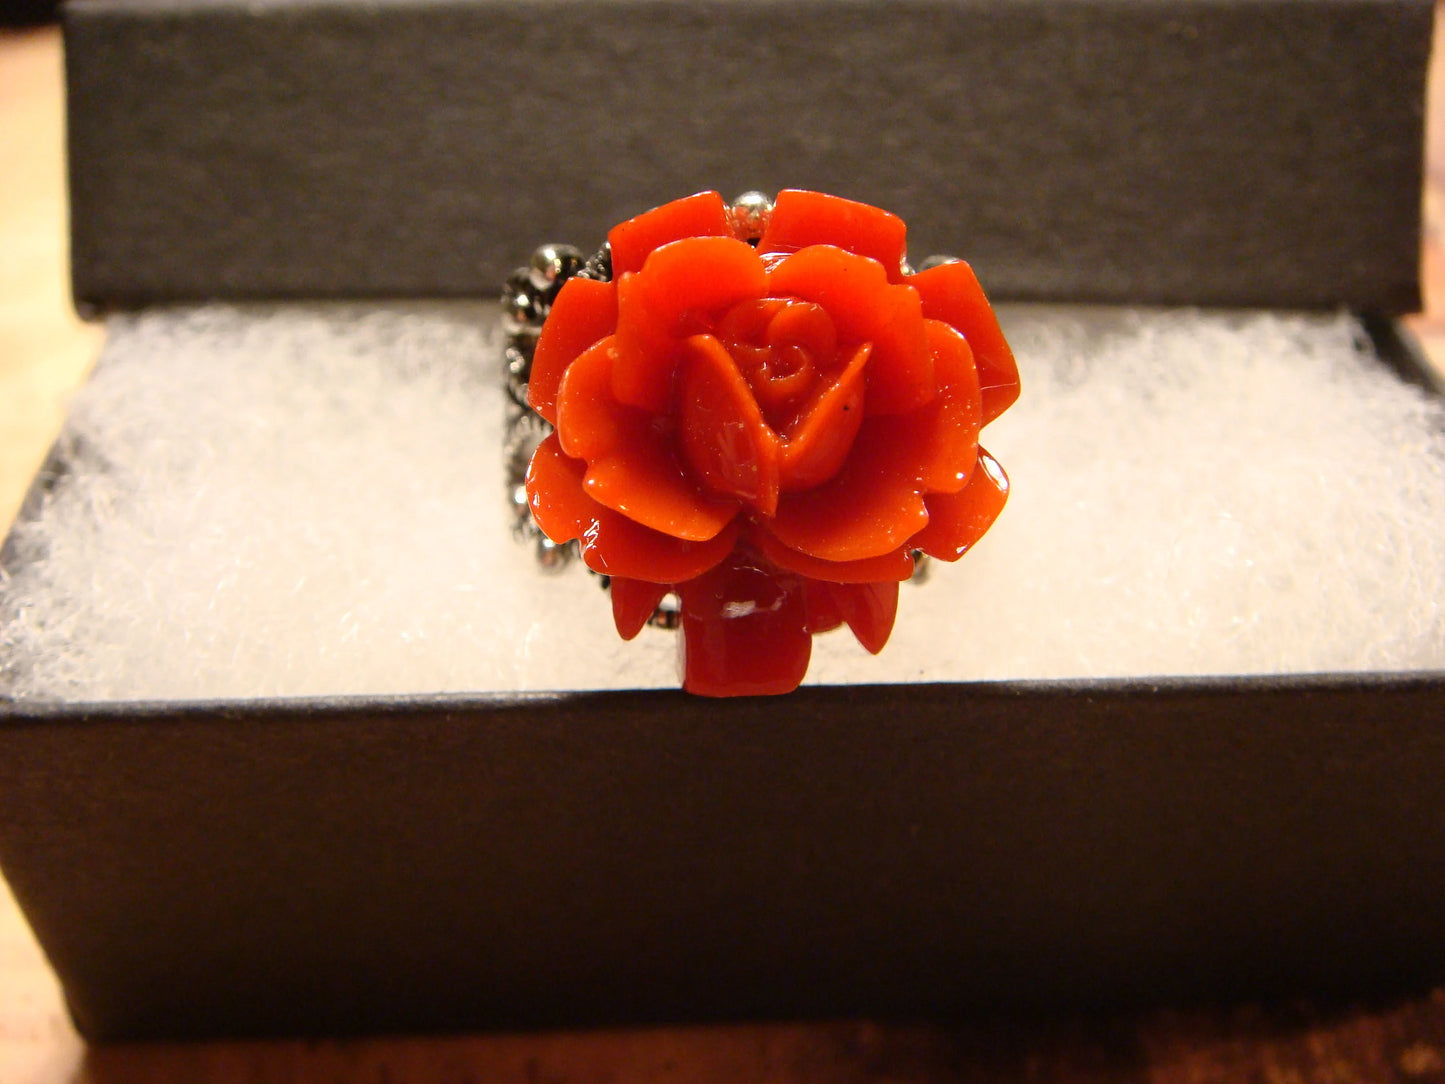 Red Rose Filigree Ring in Antique Silver - Adjustable